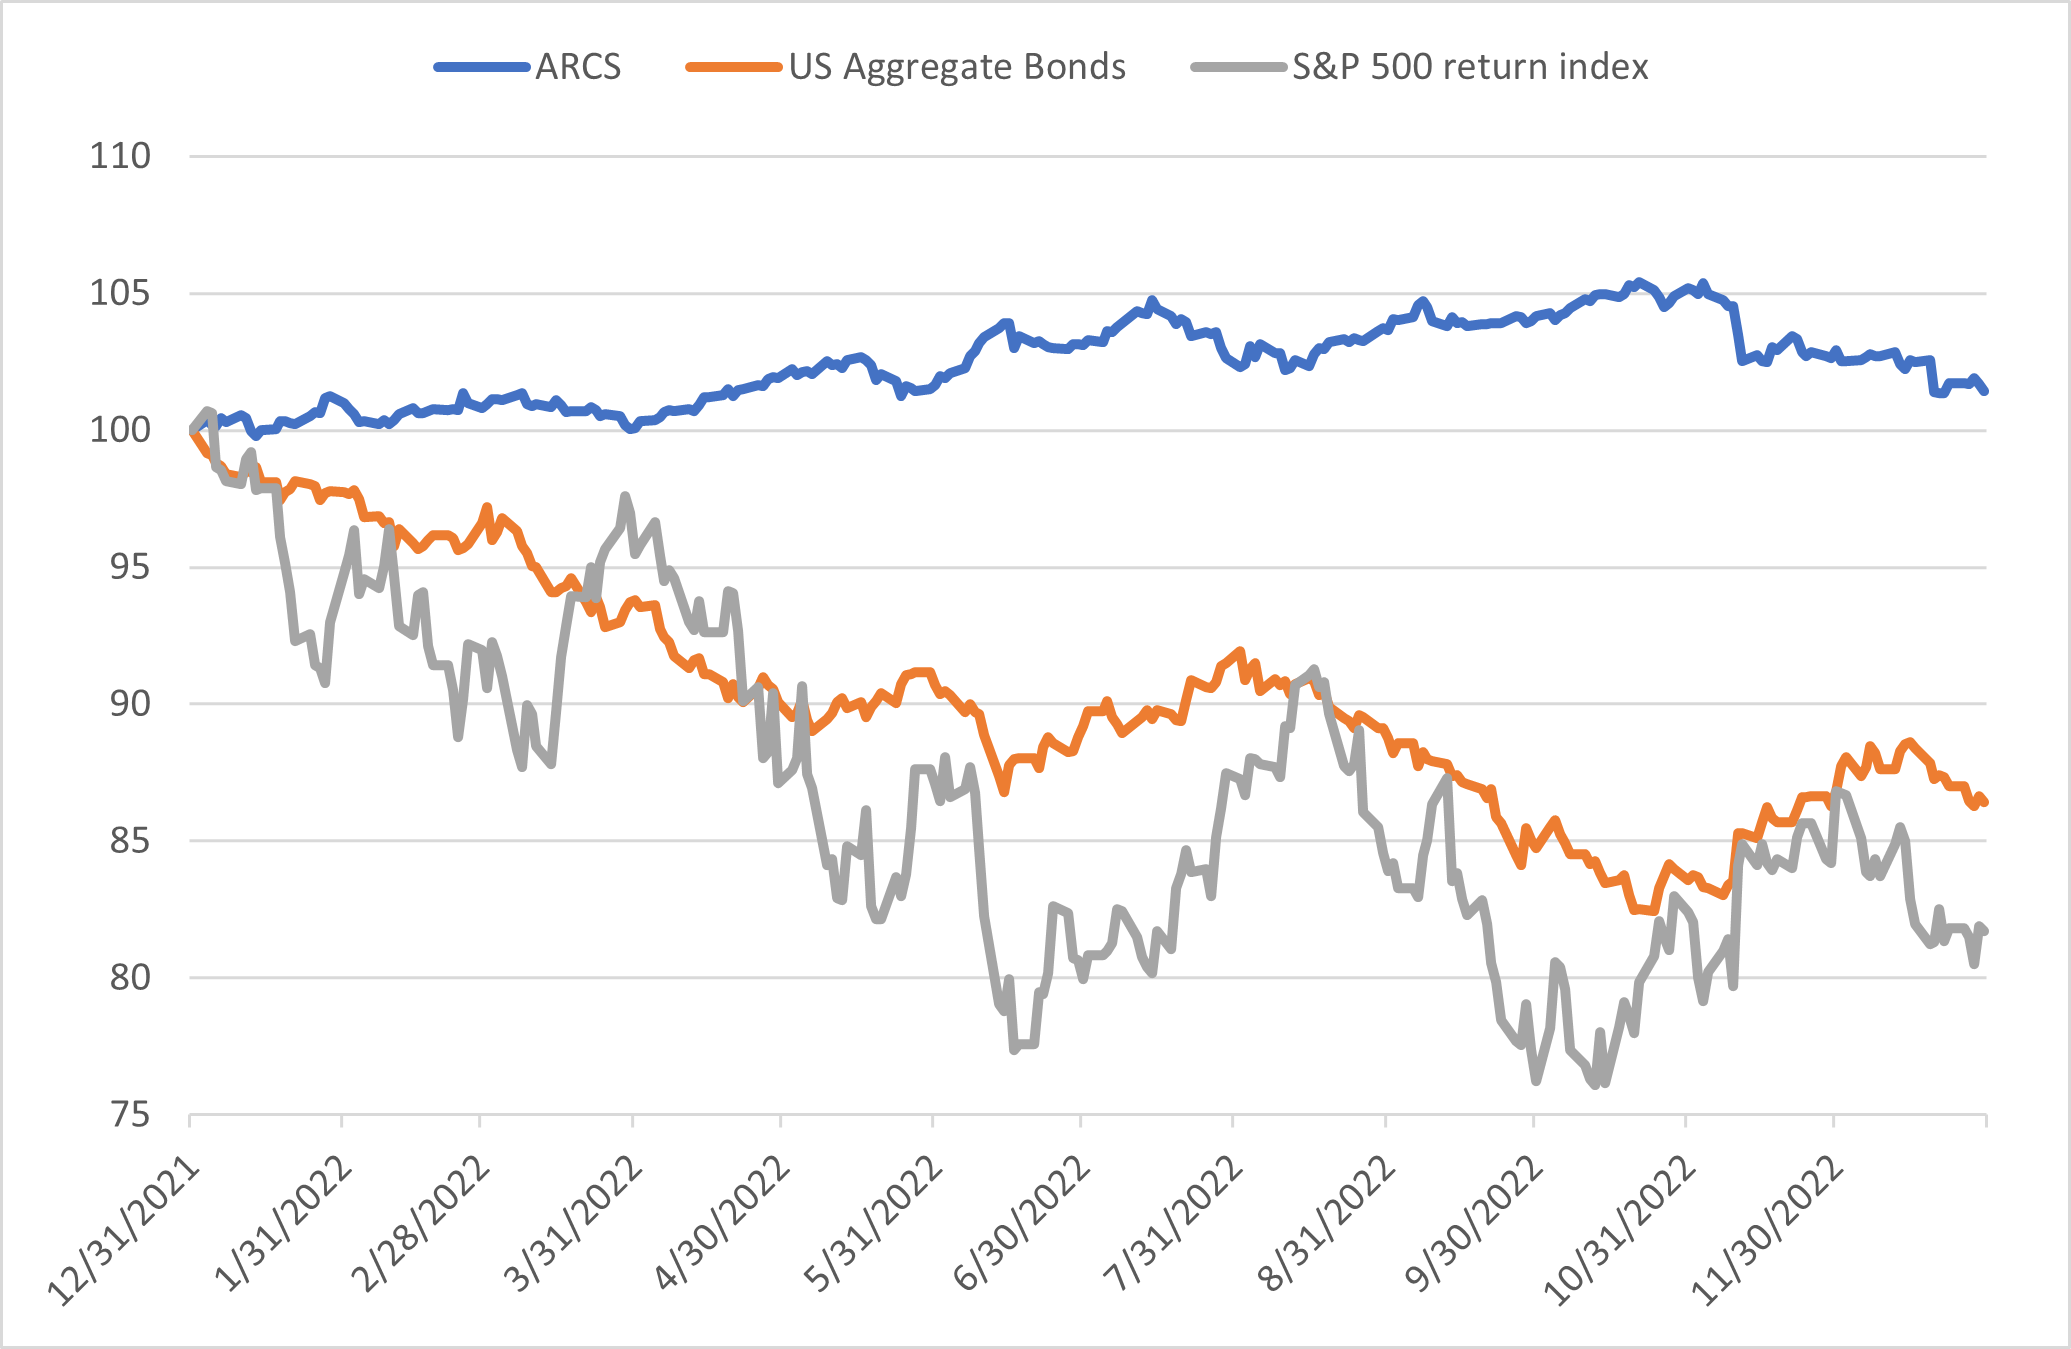 ARCS v stocks and bonds